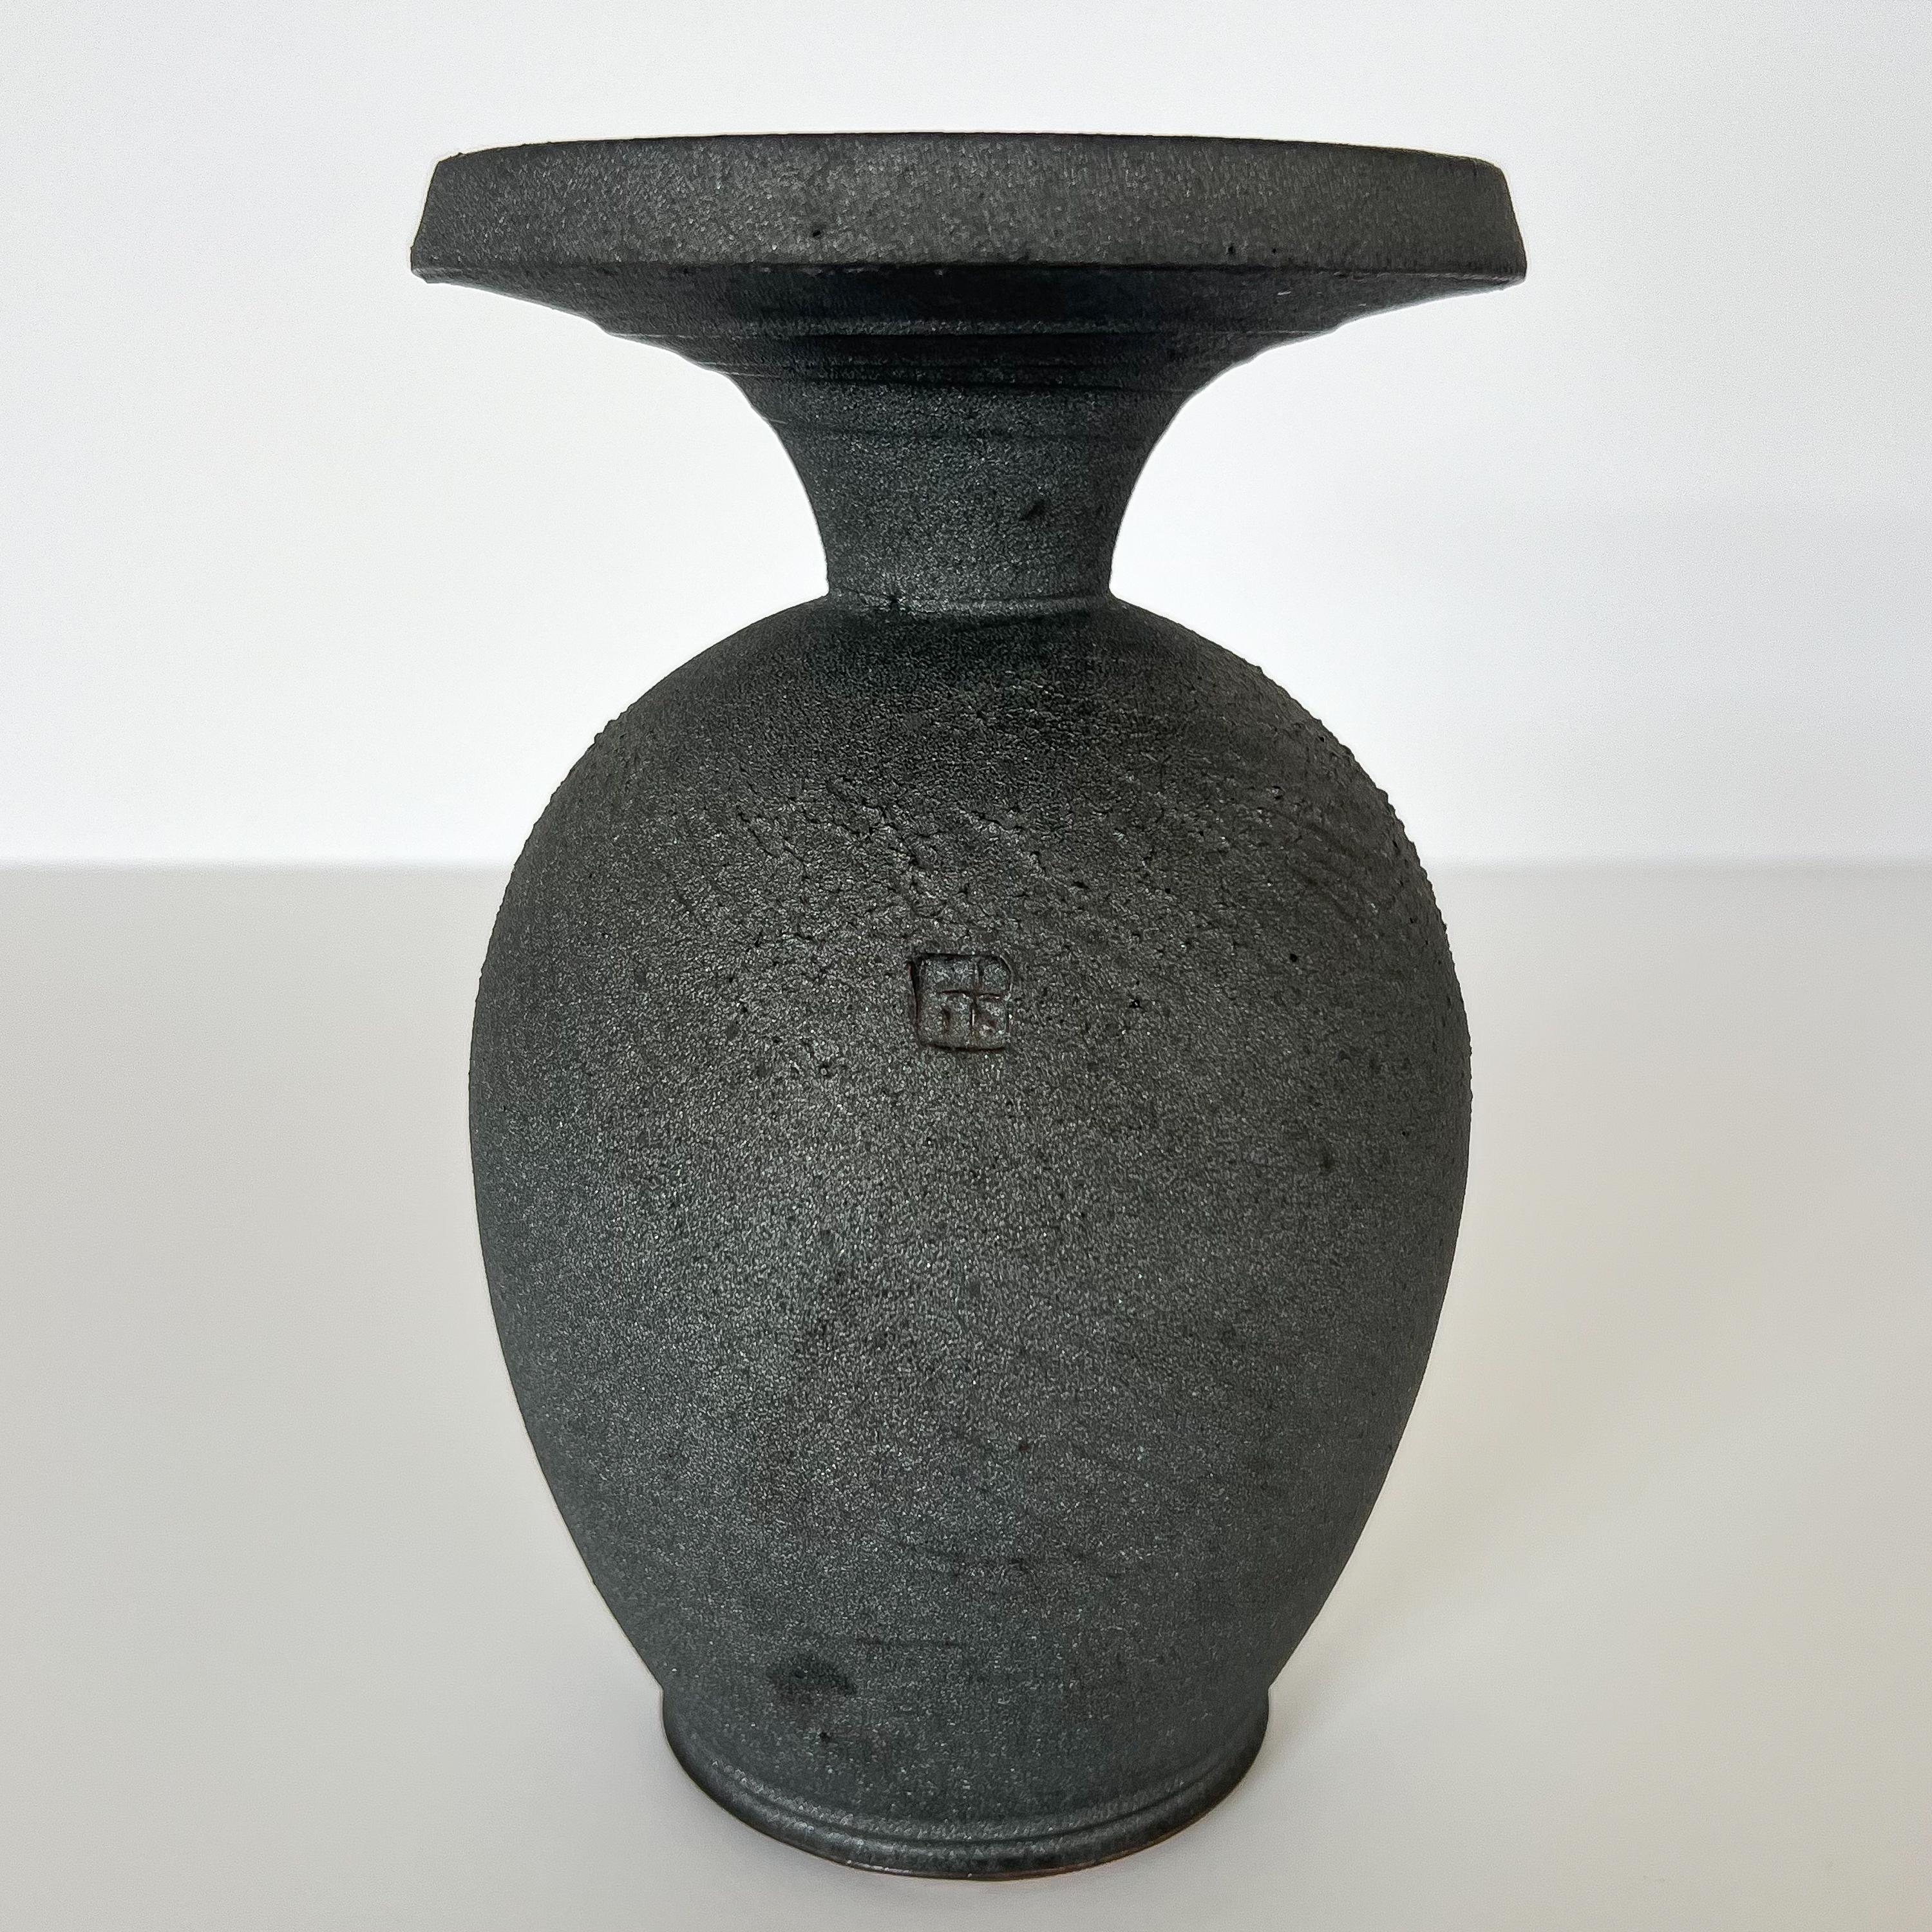 A modern glazed stoneware pottery vase by Patrick Horsley, USA circa 2000s. A hand thrown stoneware vase with black diamond glazed body and a blue an purple glazed rim. Measures 8